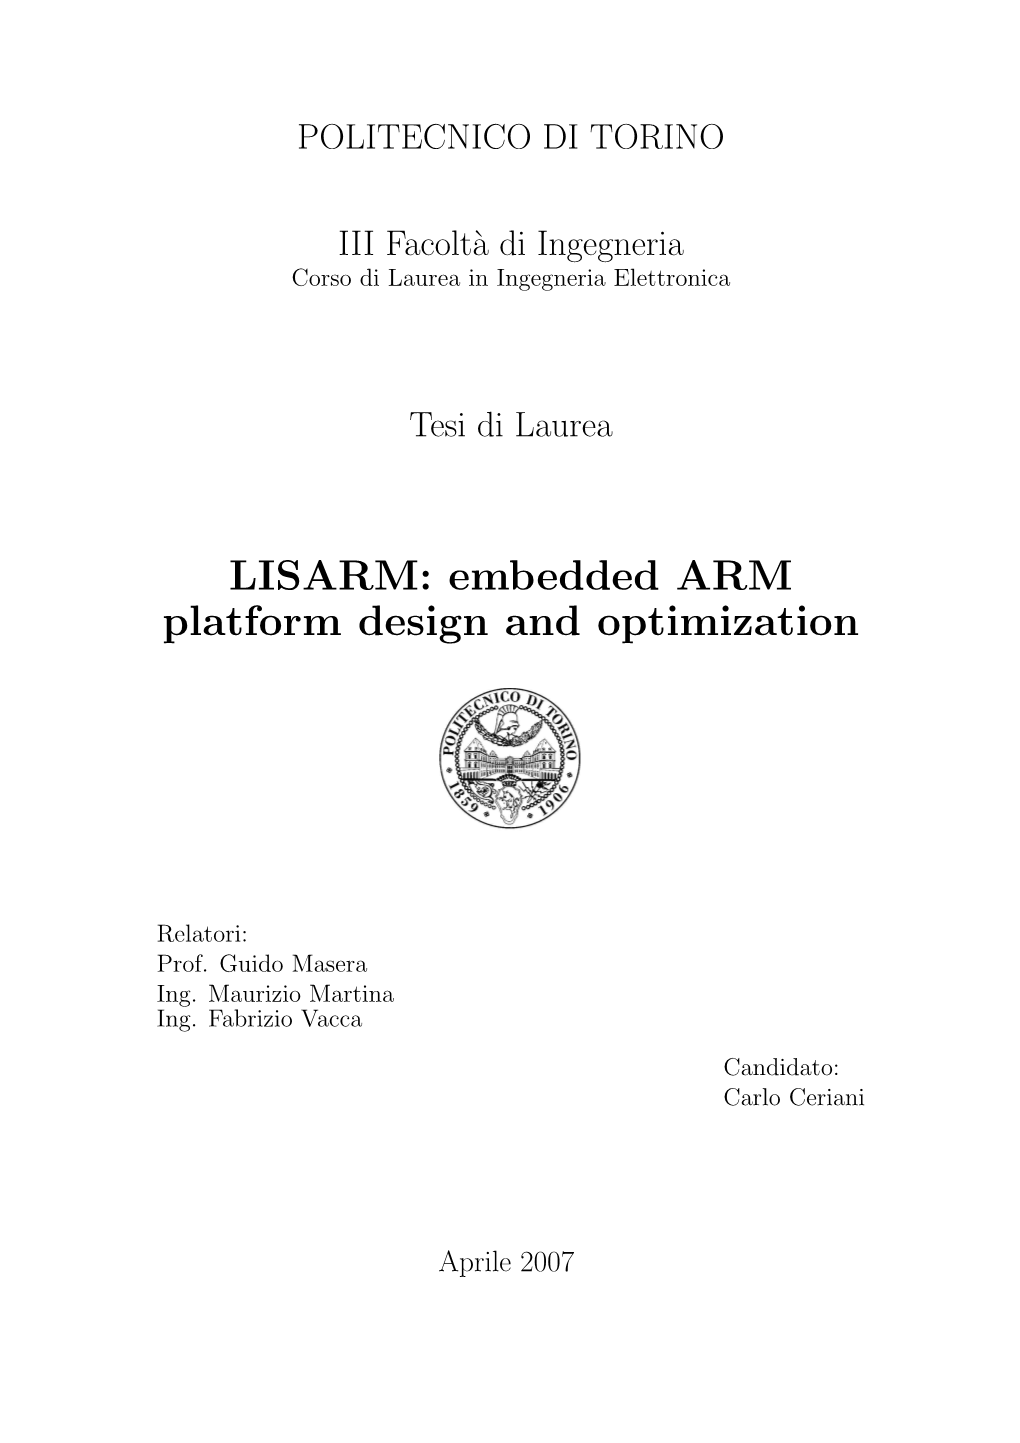 "LISARM: Embedded ARM Platform Design and Optimization" Thesis